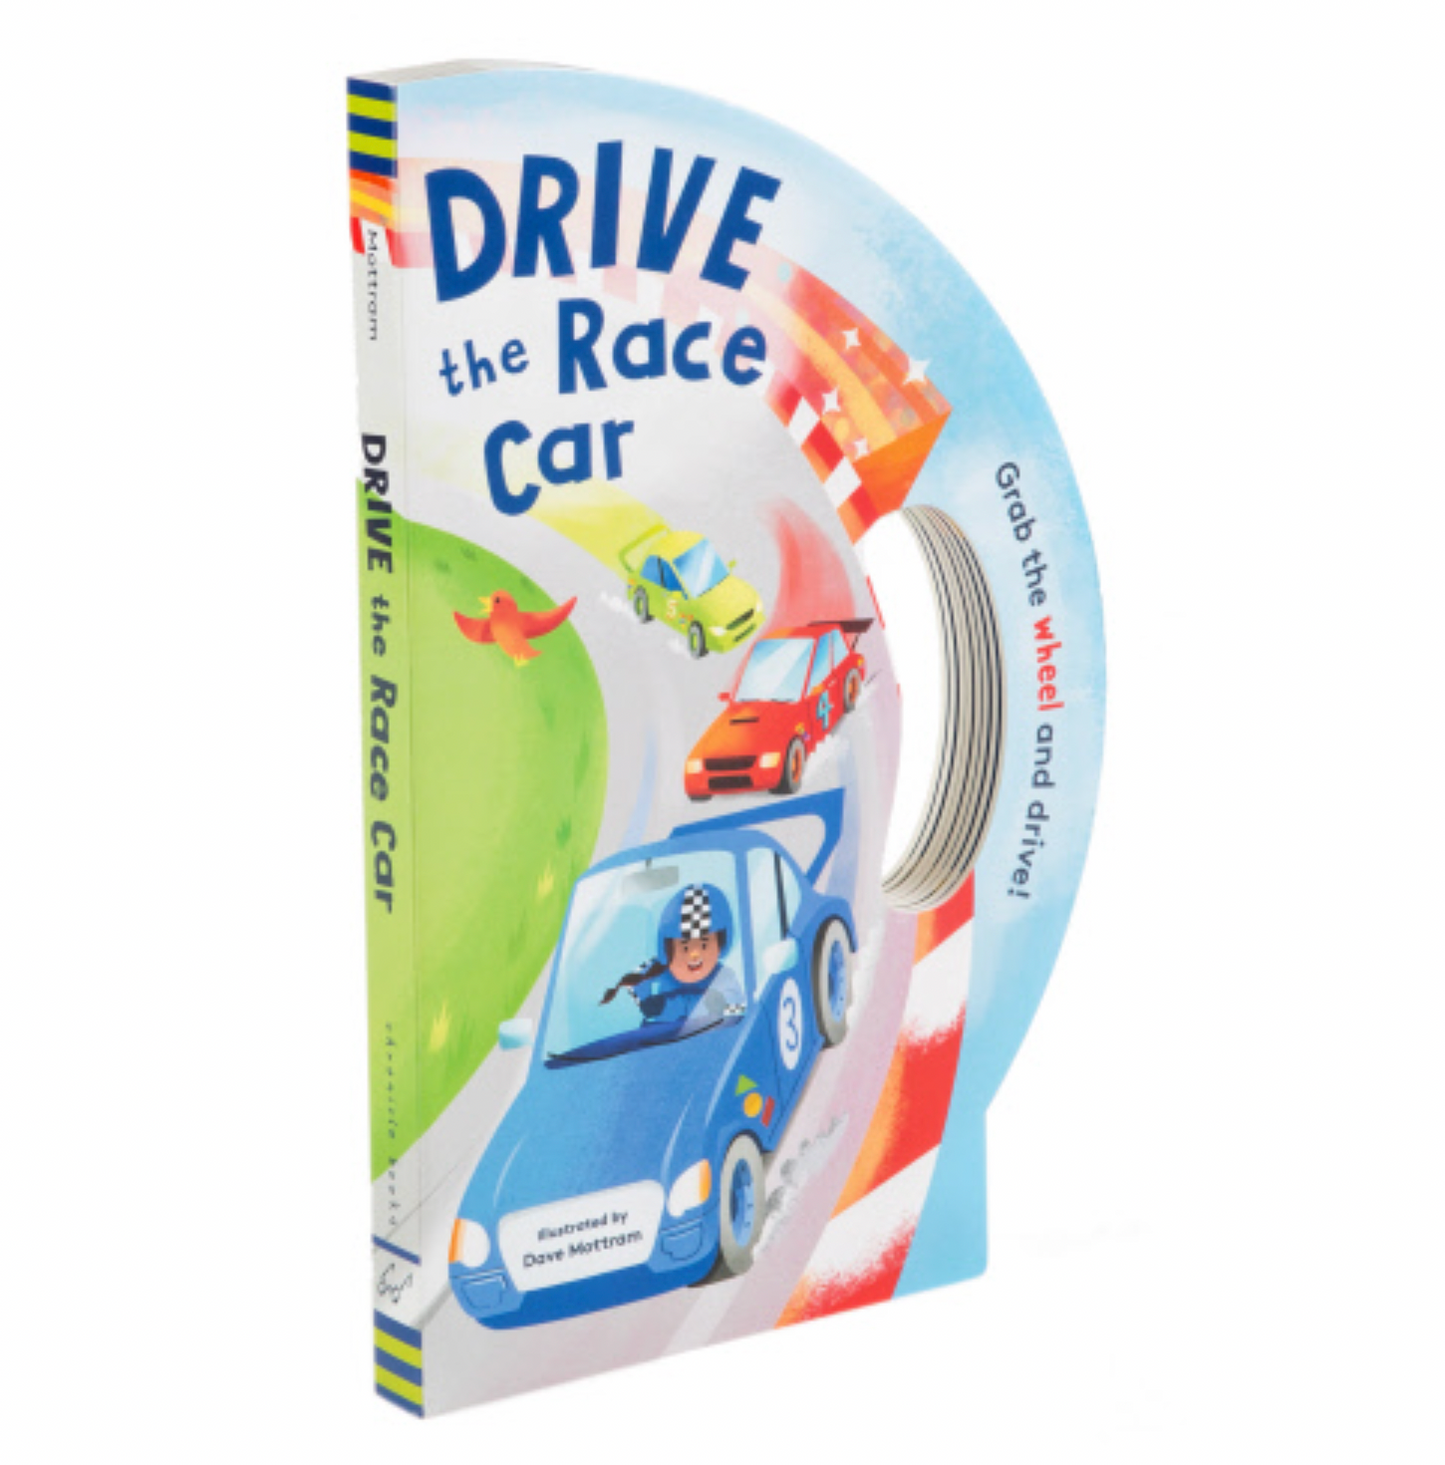 Drive the Race Car!